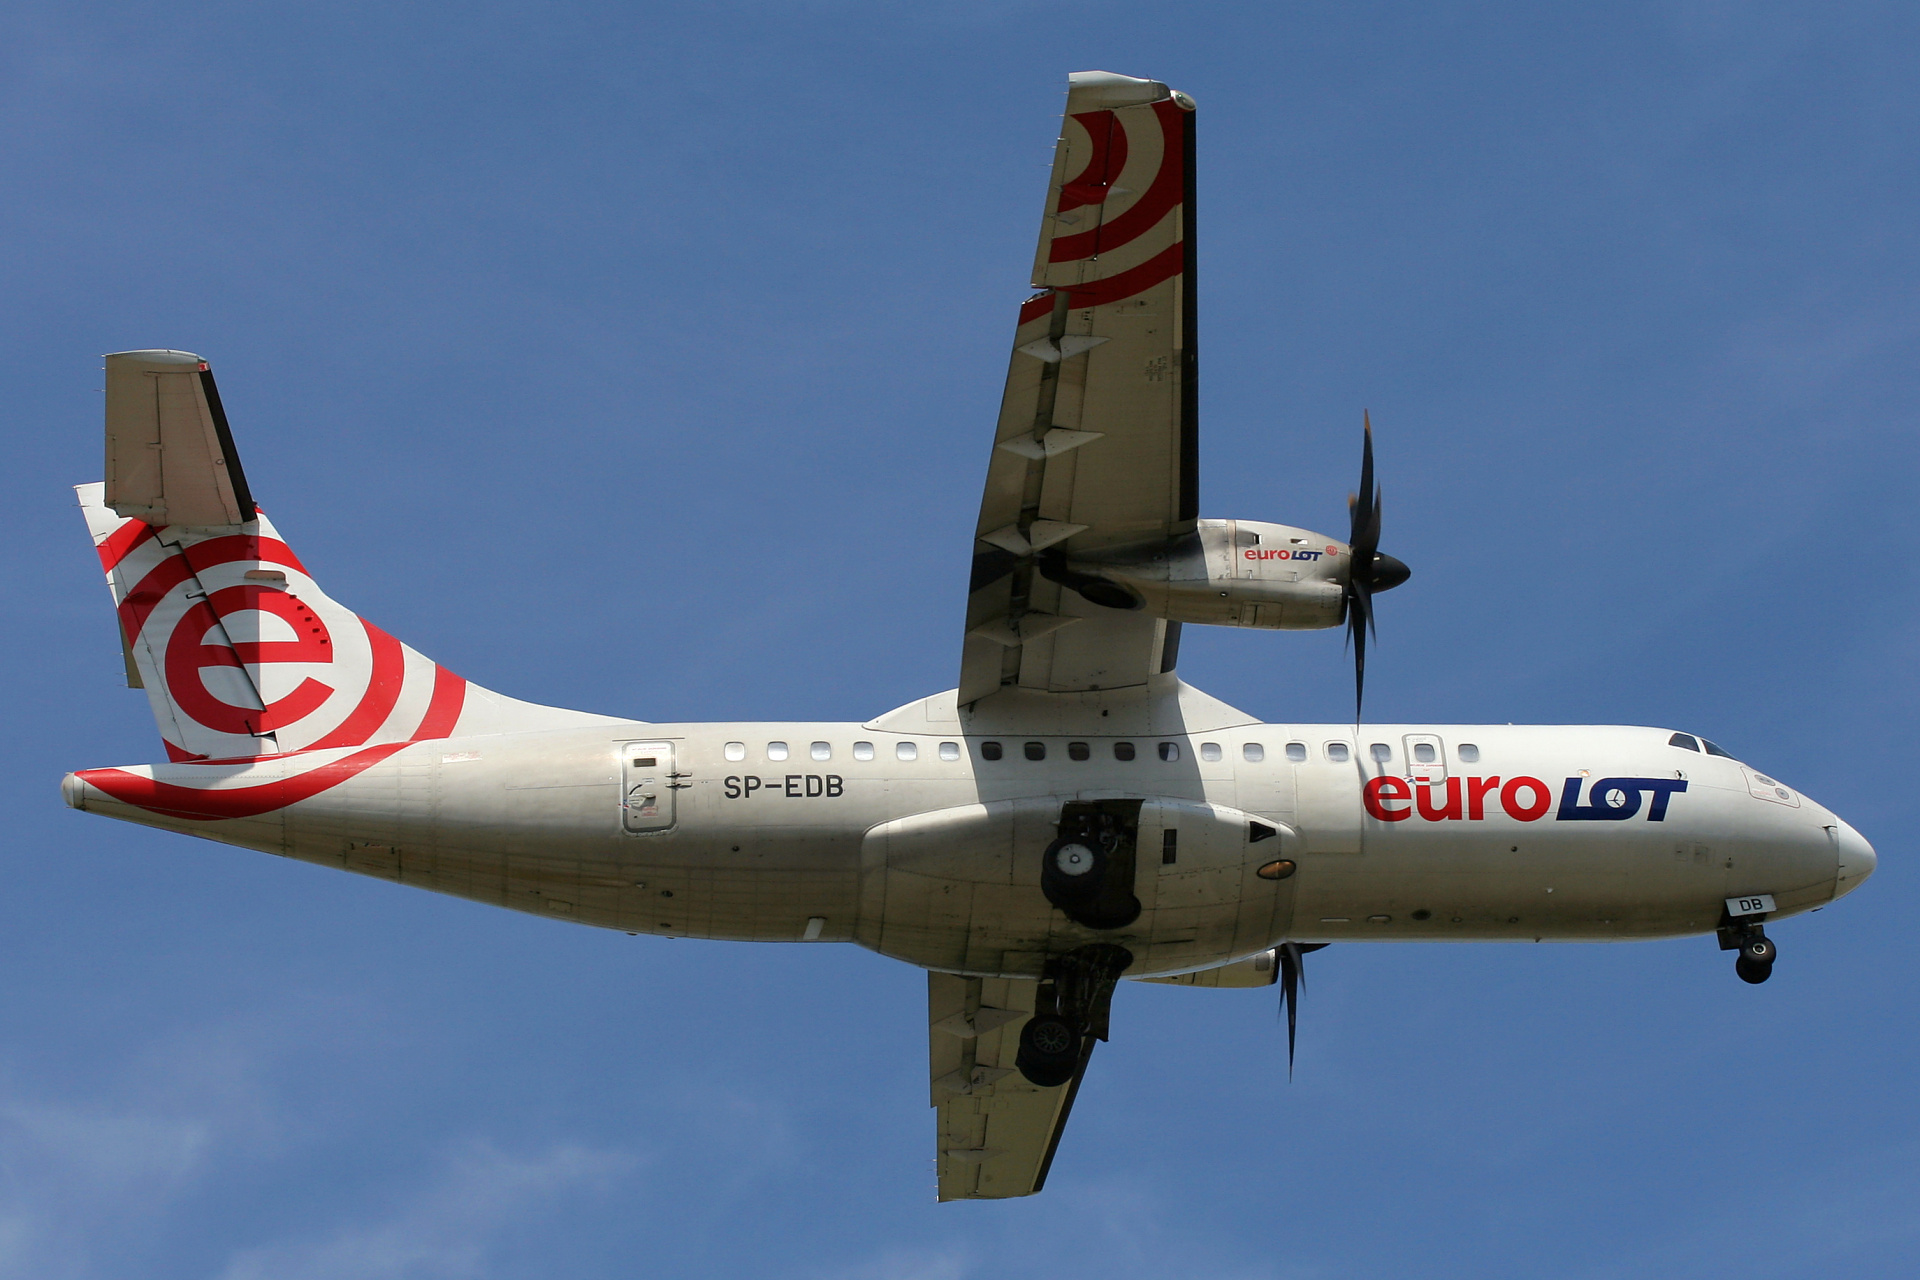 SP-EDB (Samoloty » Spotting na EPWA » ATR 42 » EuroLOT)